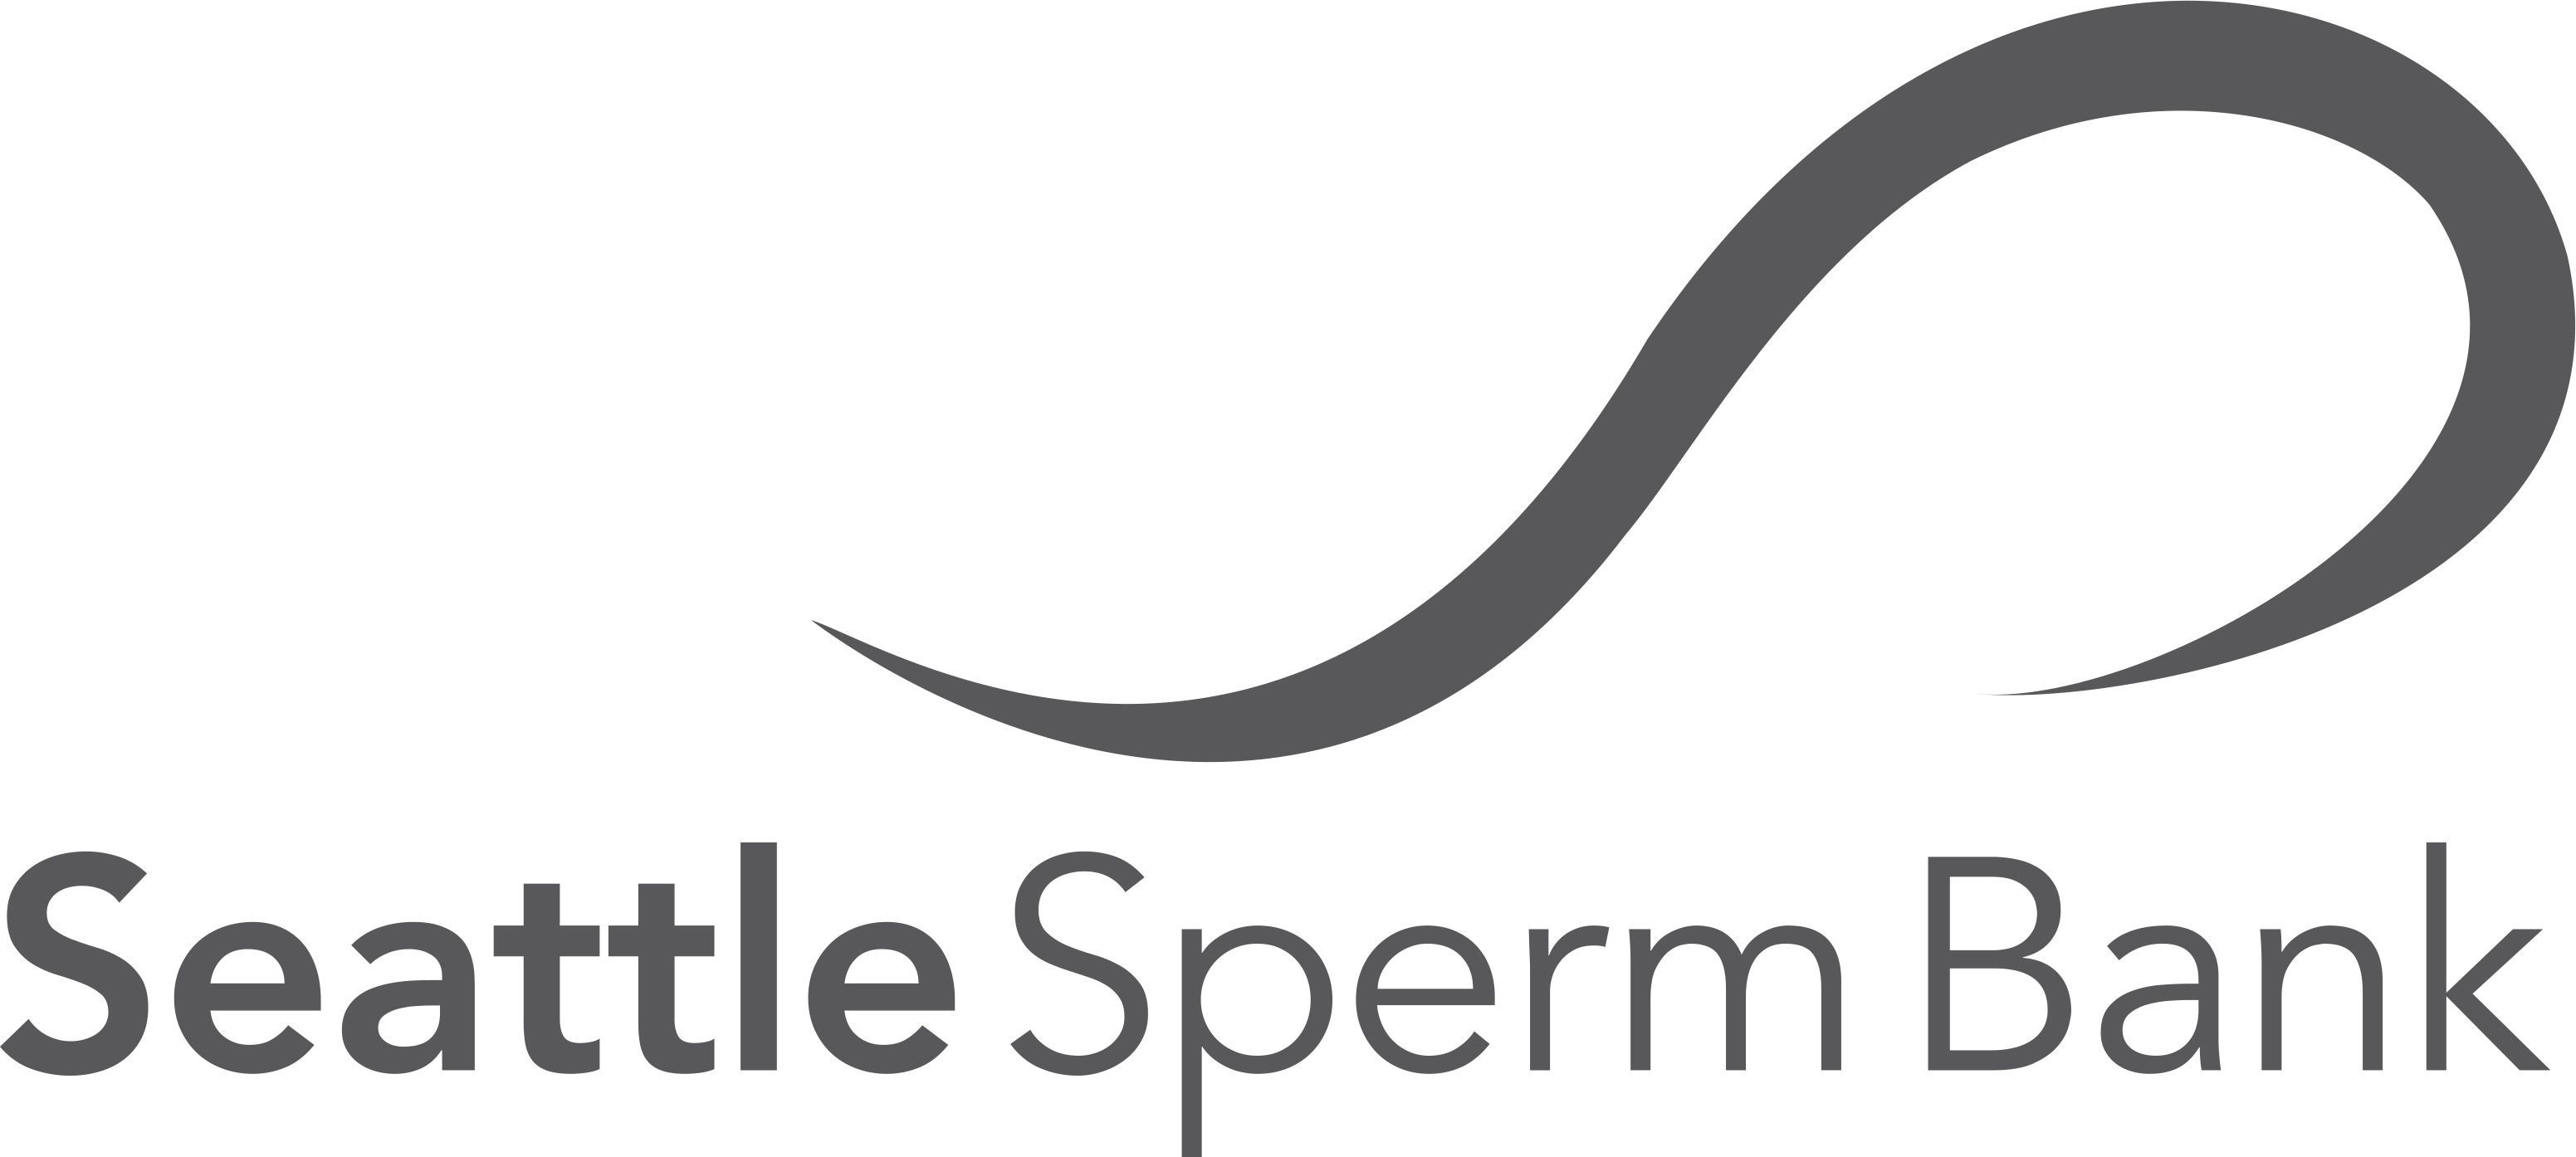 Bank pennsylvania sperm